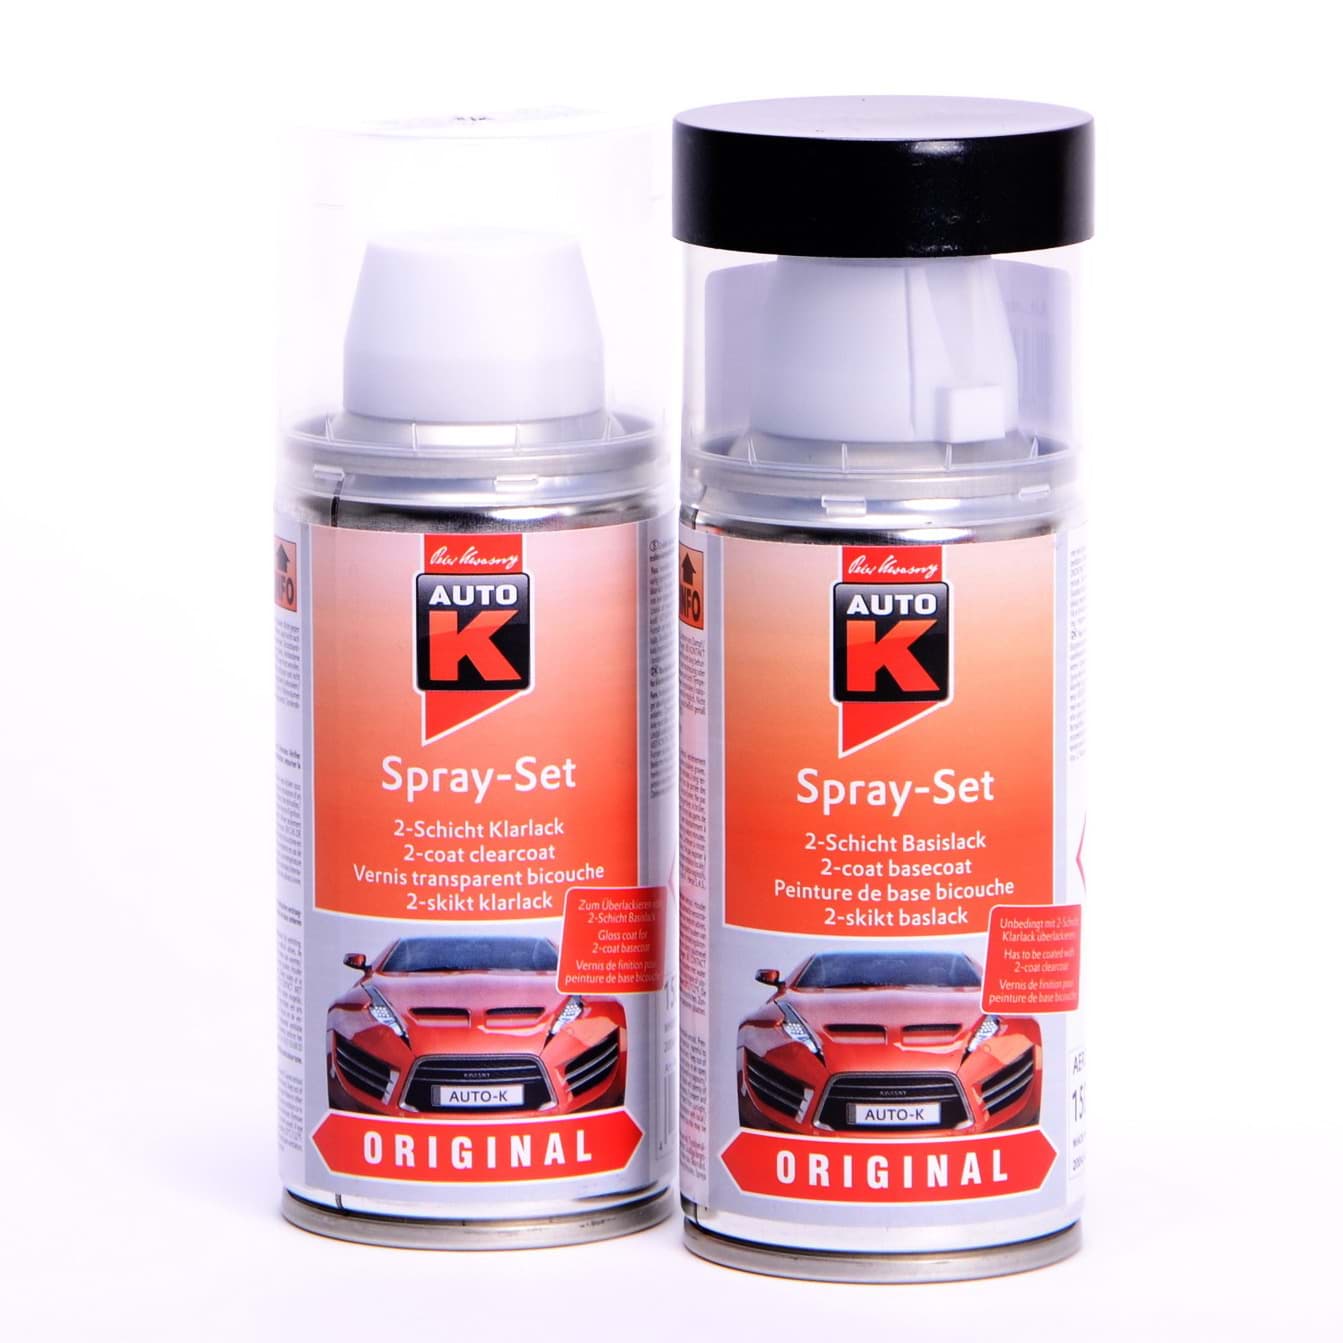 Auto-K Spray-Set Autolack für Renault 640 Gris Iceberg met 43379 resmi